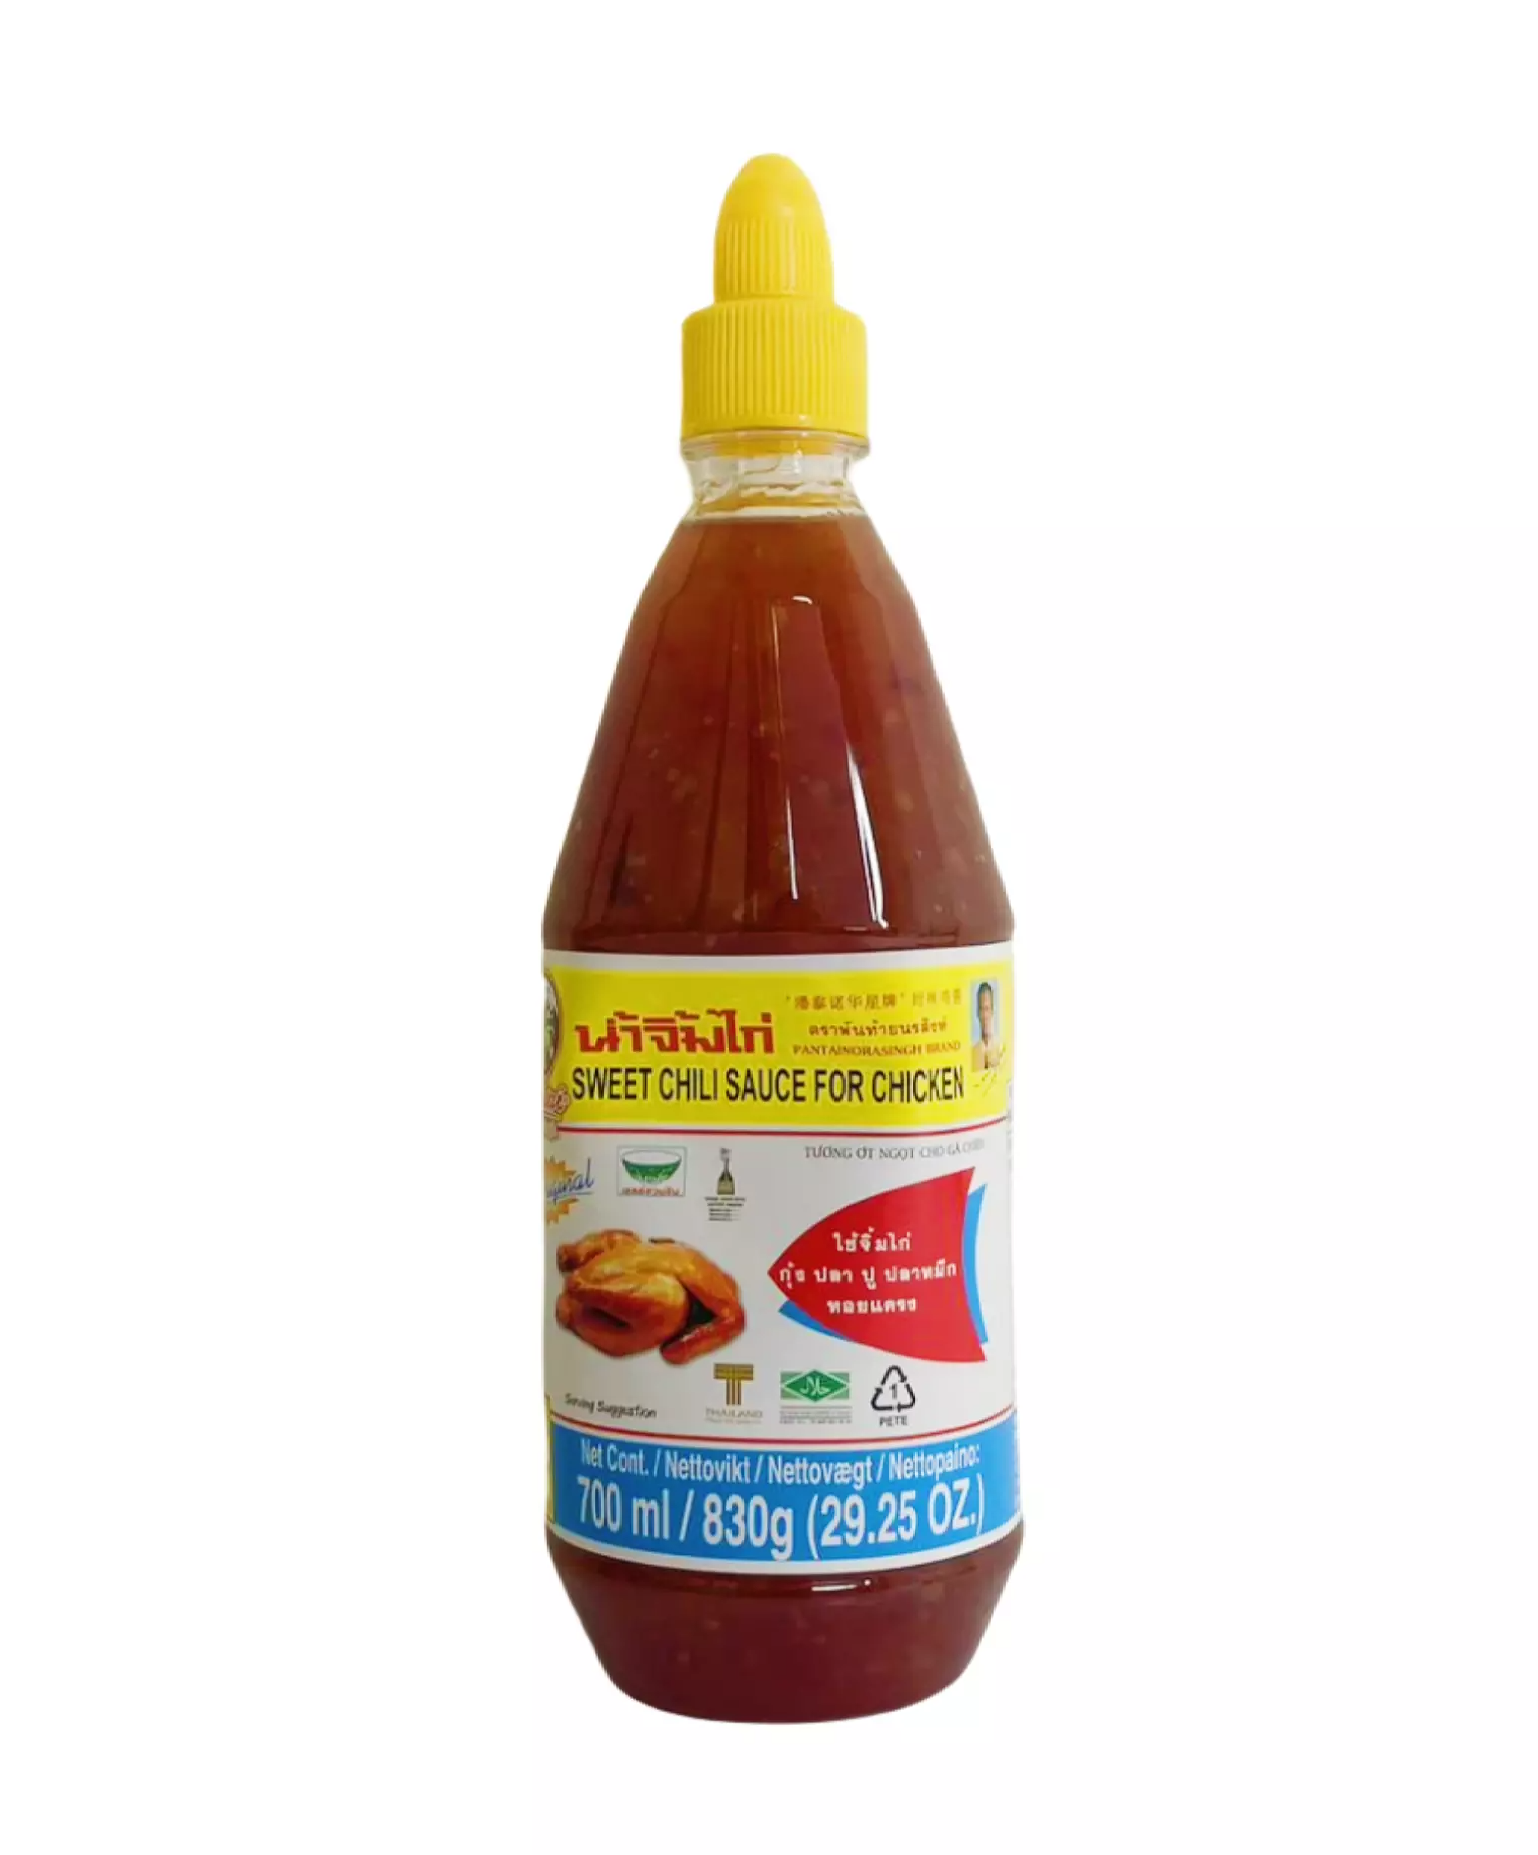 Sweet ChiIi Sauce for Chicken PET 700ml Pantai noraingh Thailand